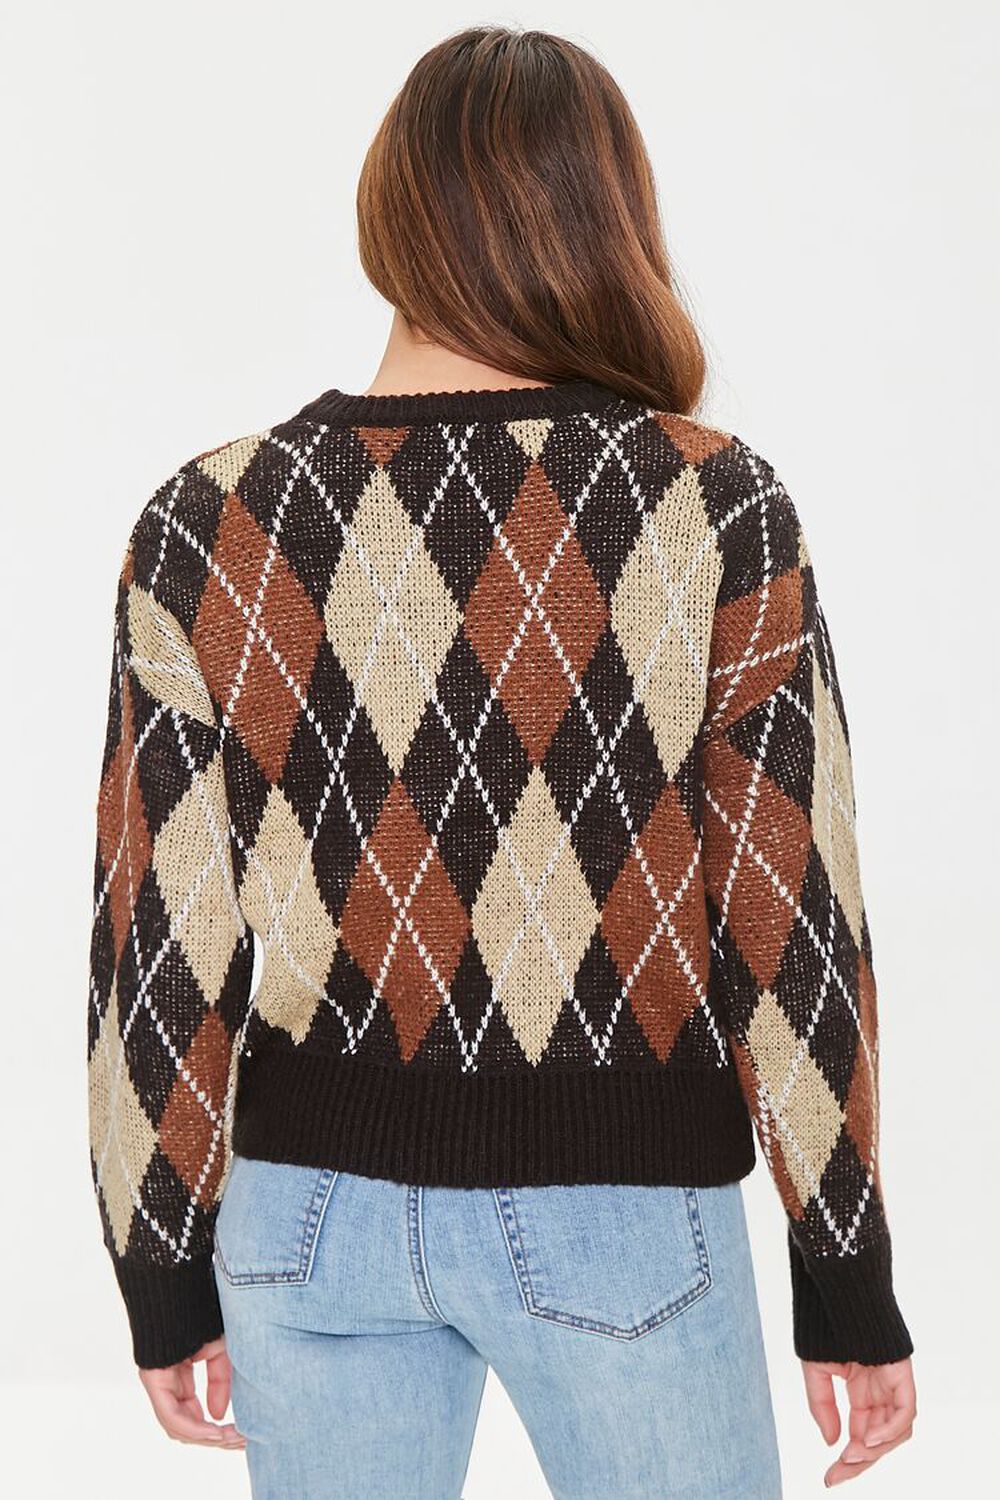 BROWN/MULTI Argyle Drop-Sleeve Sweater, image 3